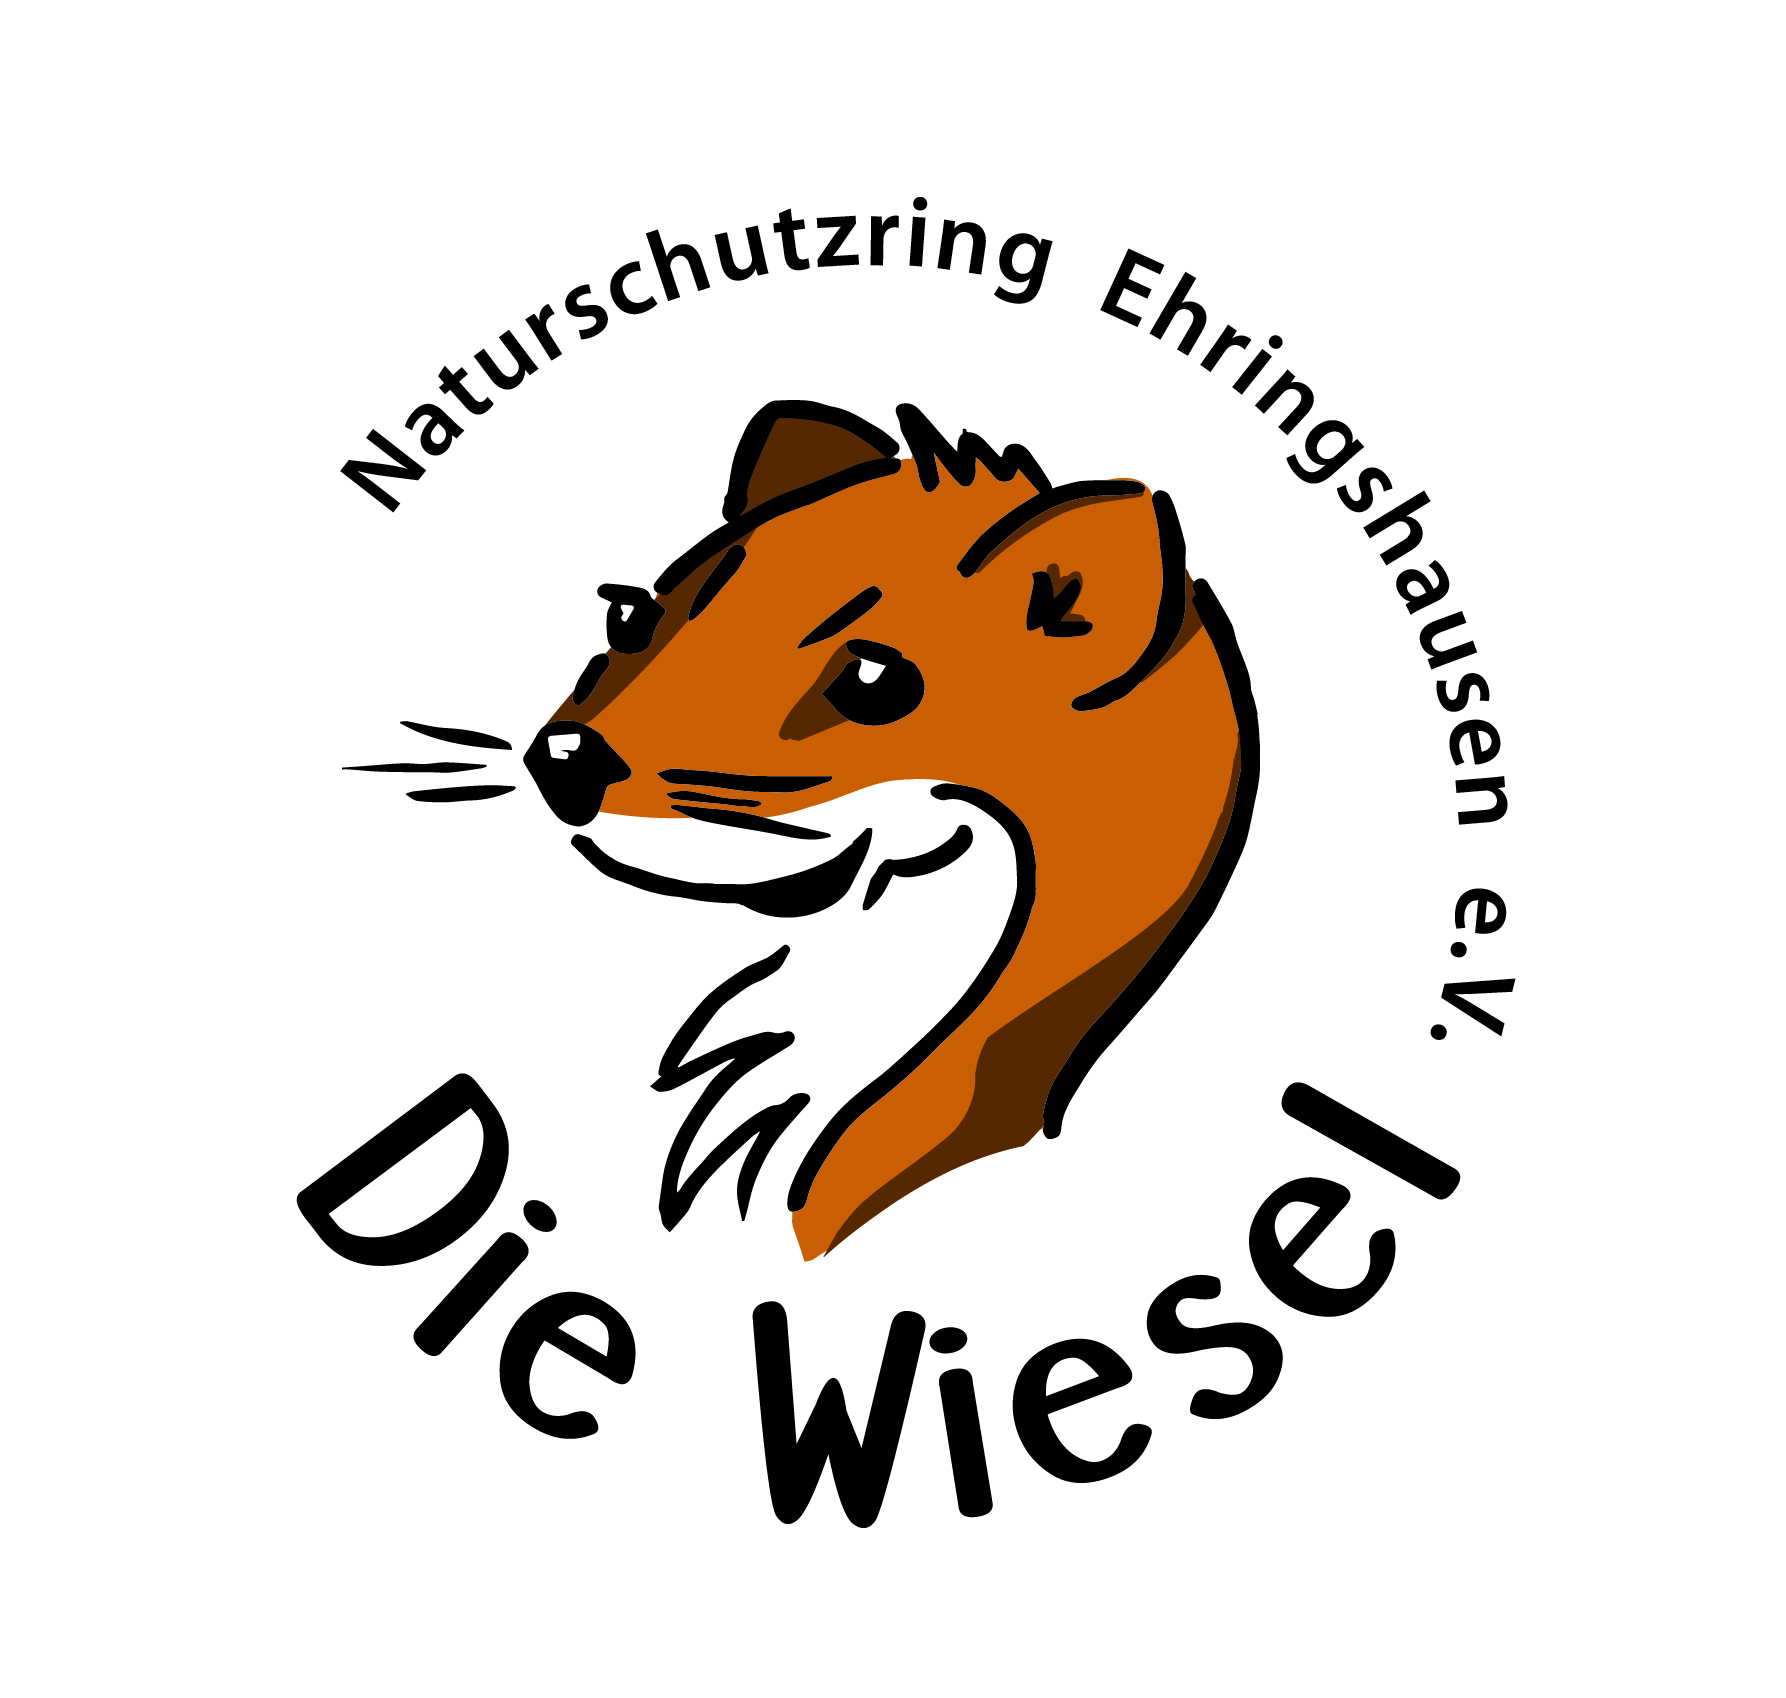 Die Wiesel - Naturschutzring Ehringshausen e.V.